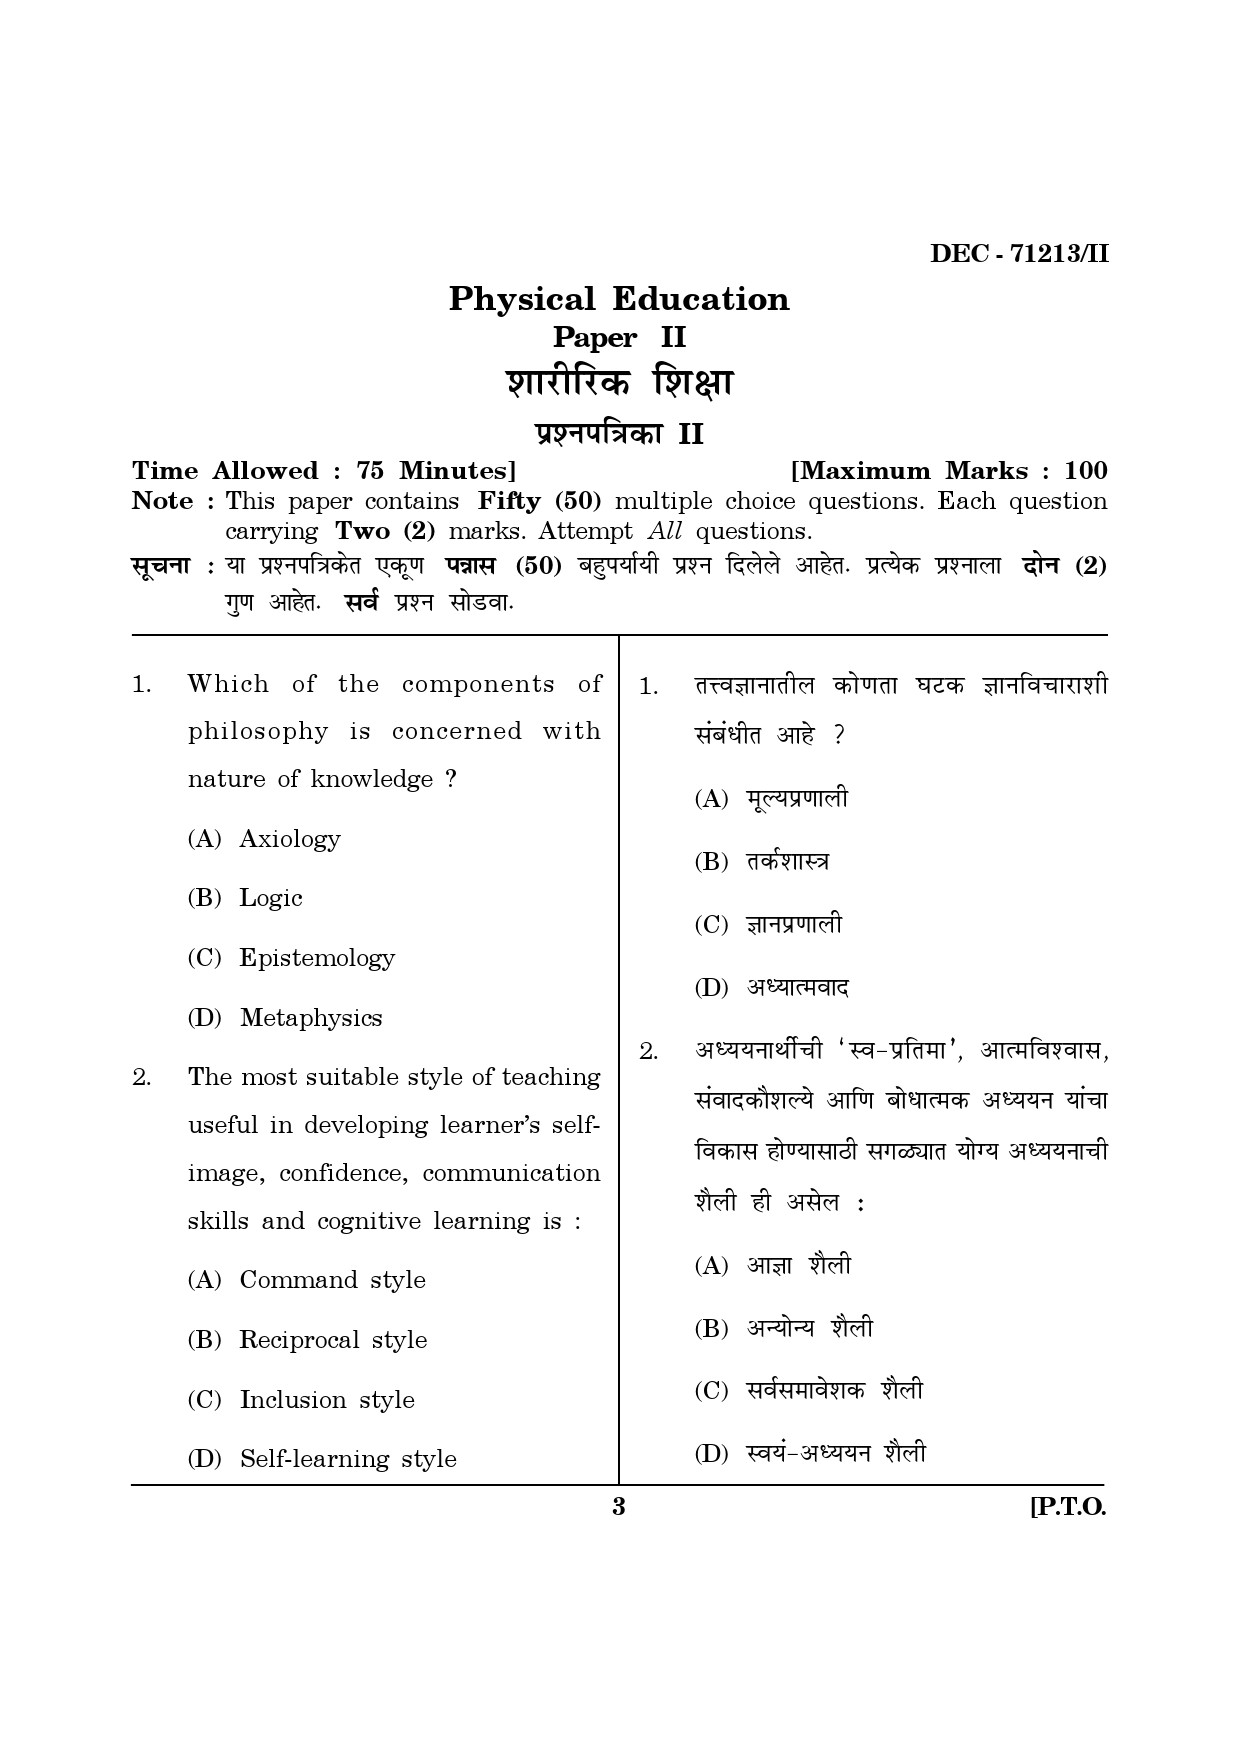 Maharashtra SET Physical Education Question Paper II December 2013 2